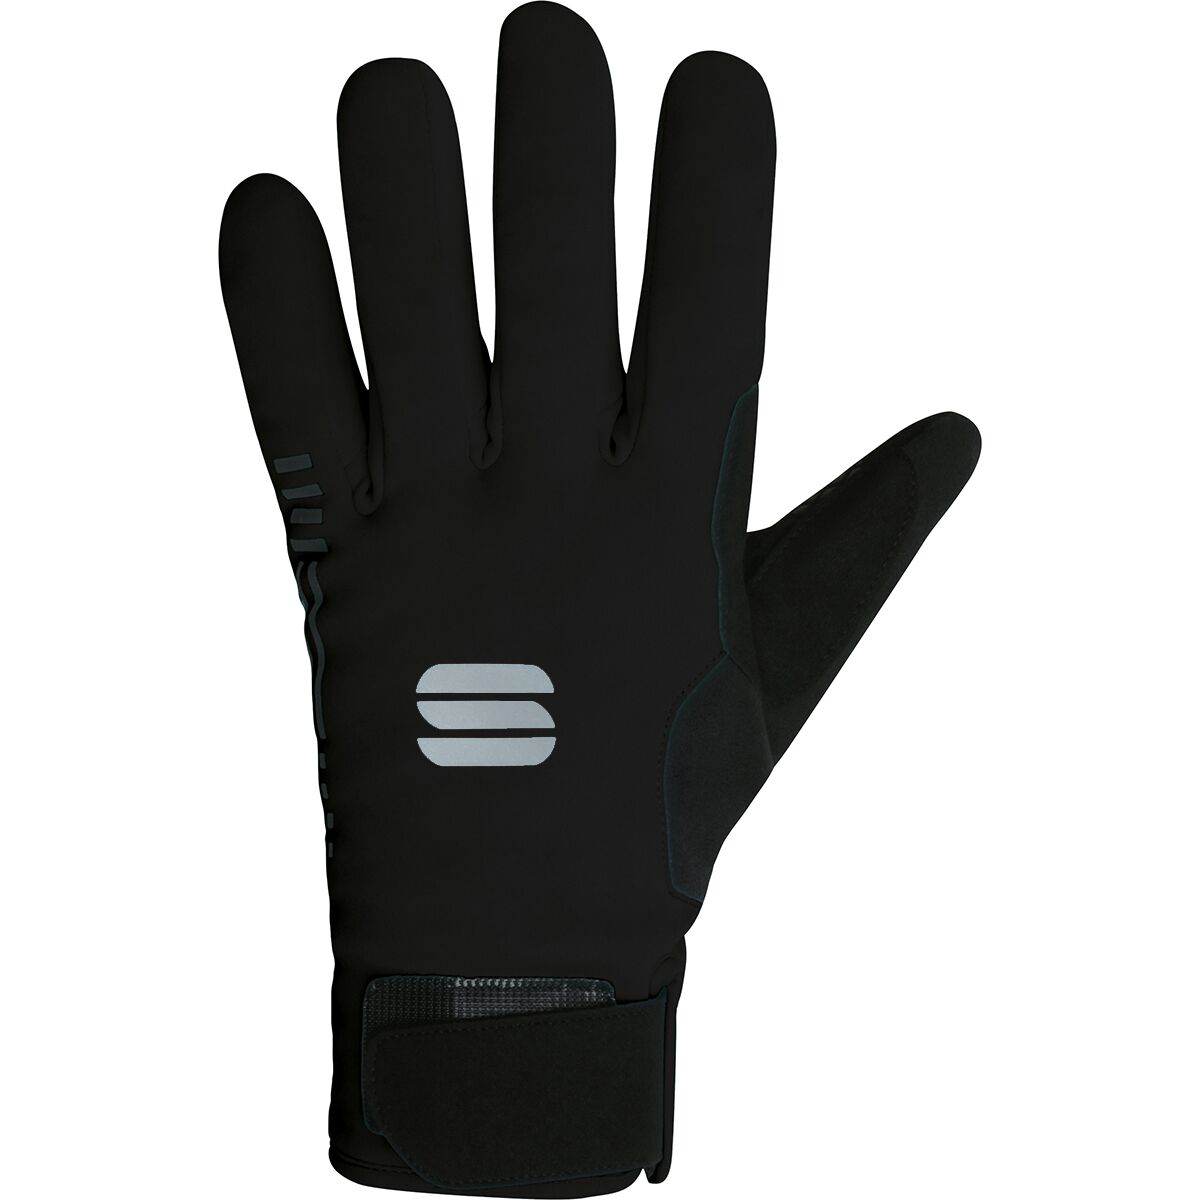 Sportful Sottozero winter gloves review | Cyclingnews